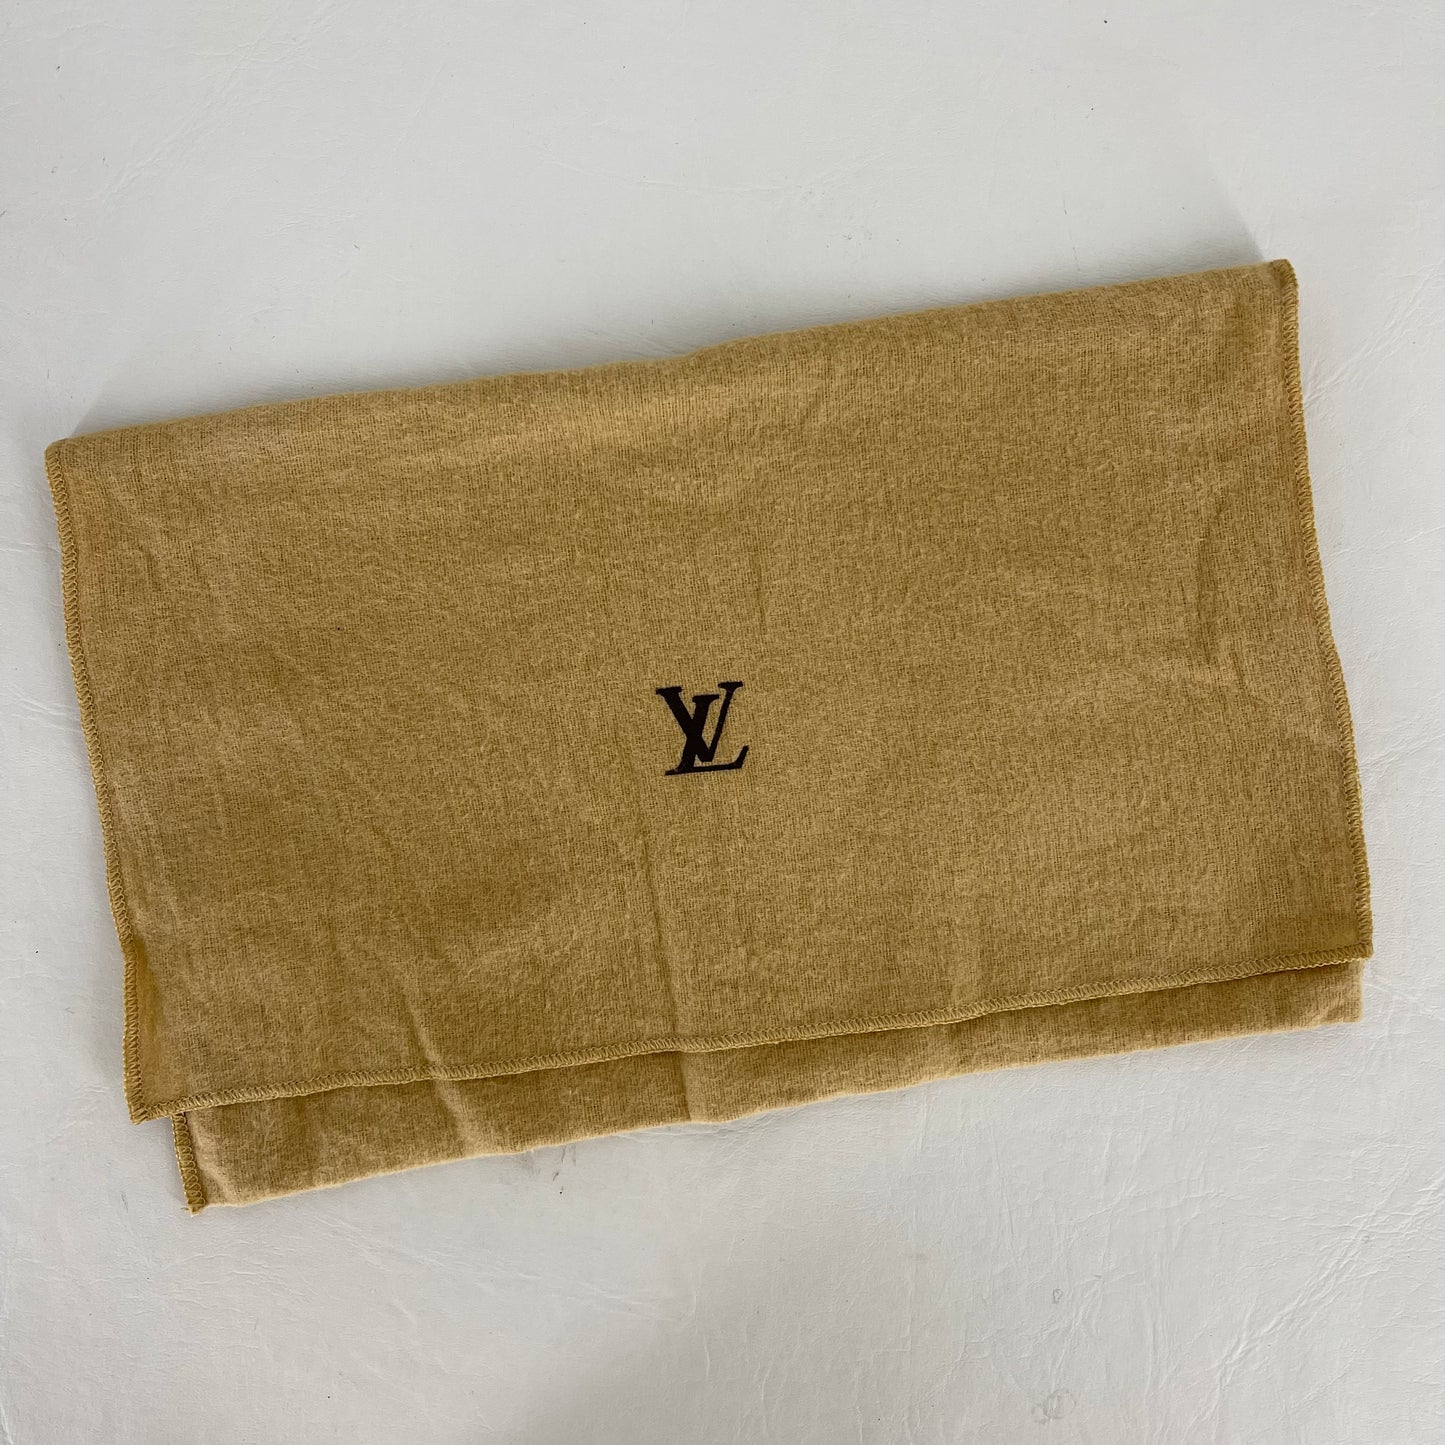 Authentic Louis Vuitton Monogram Twin